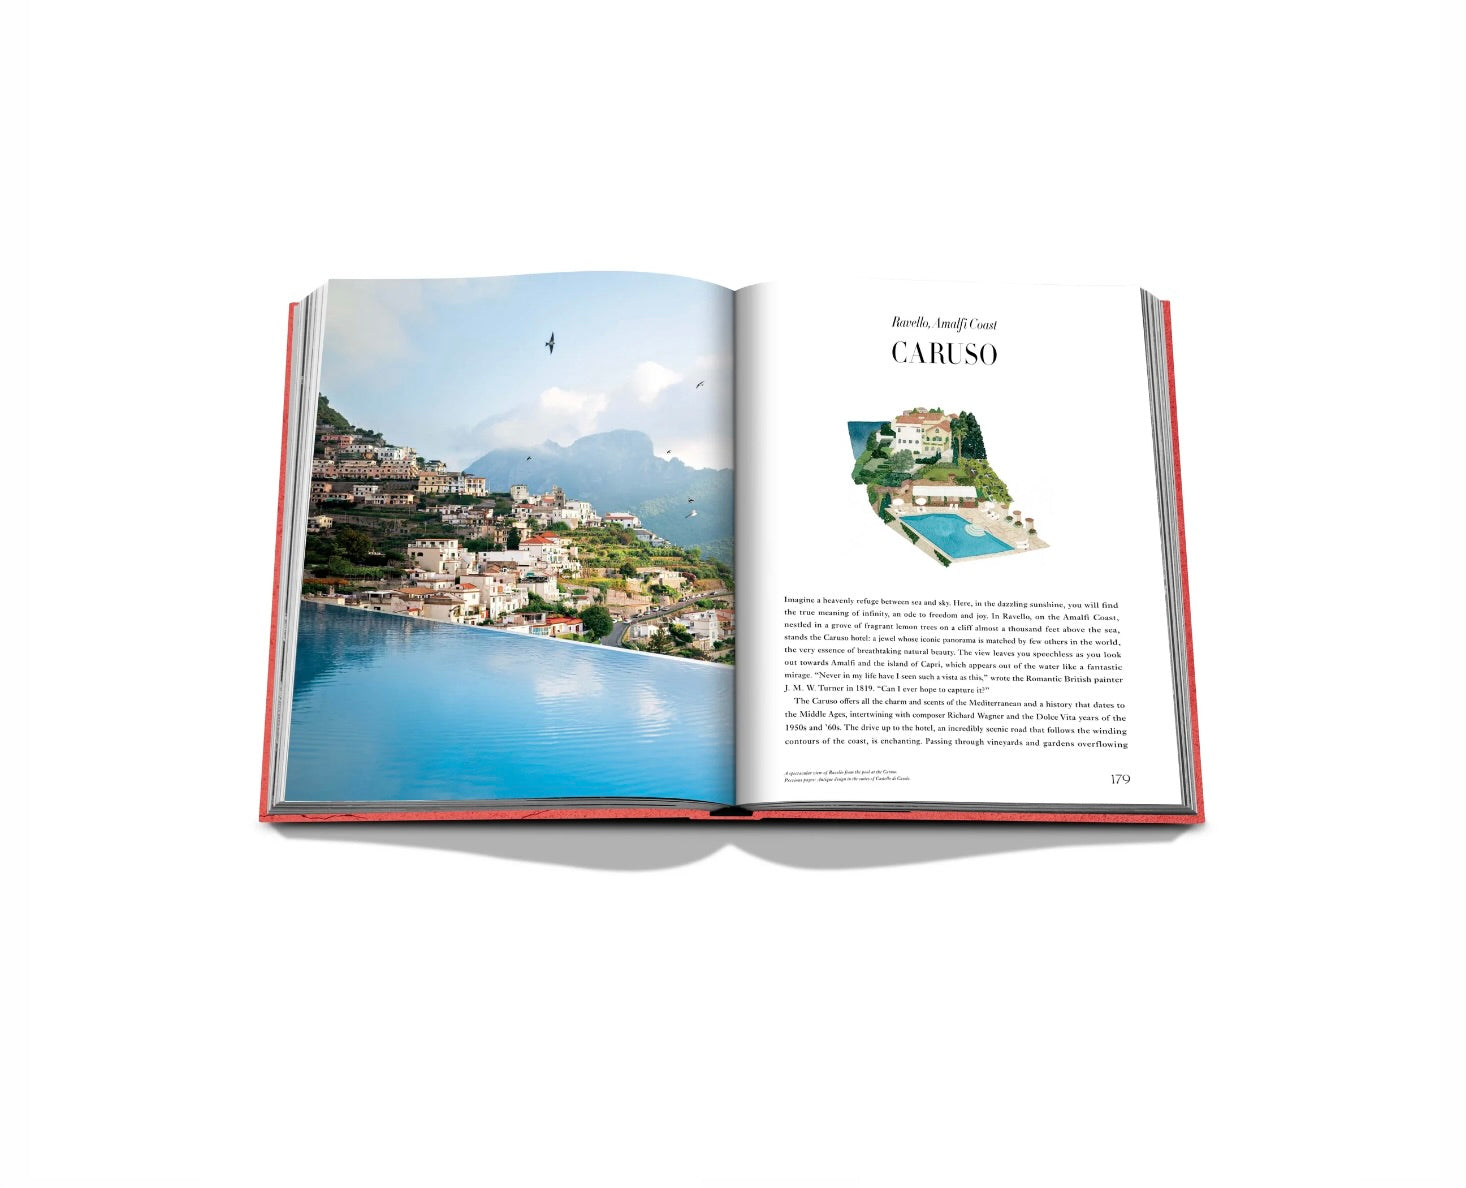 Villeggia Tura : Italian Summer Vacation Book